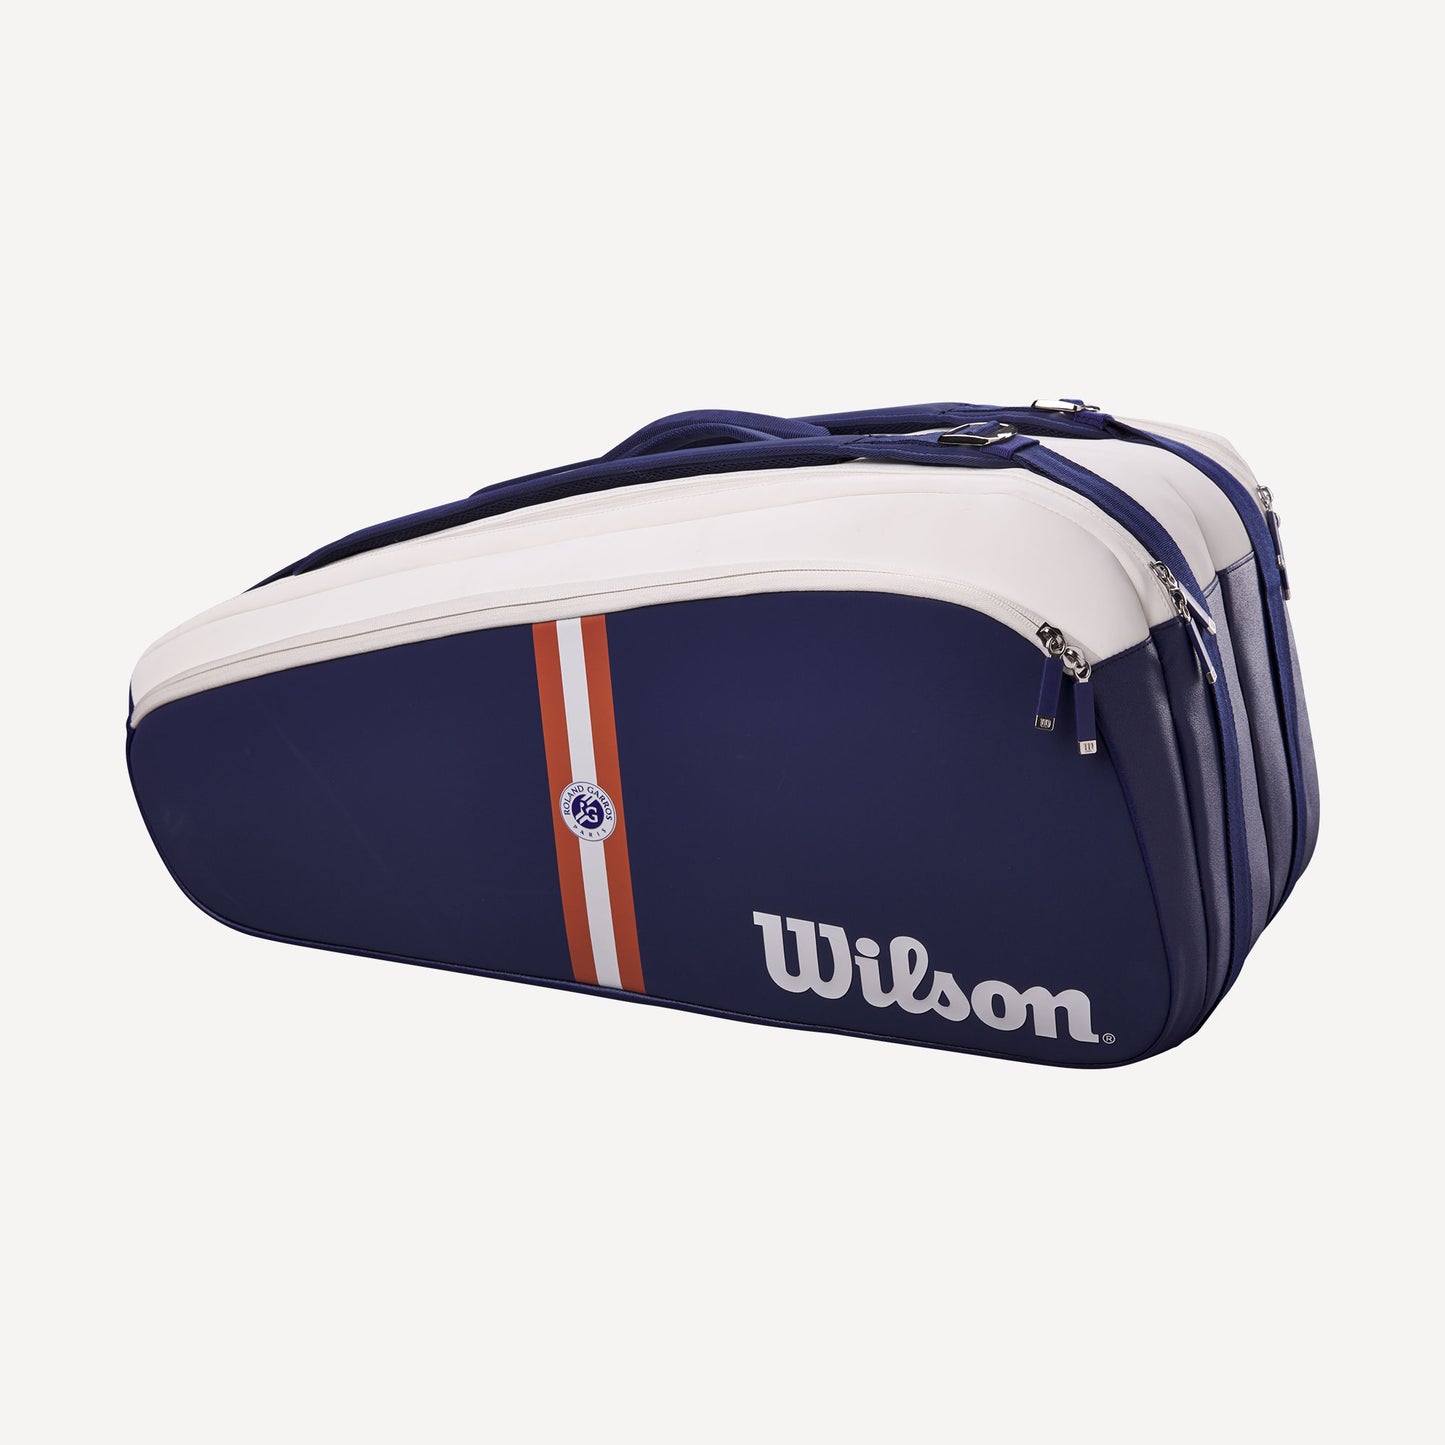 Wilson Roland-Garros Super Tour 9 Pack Tennis Bag Blue (2)